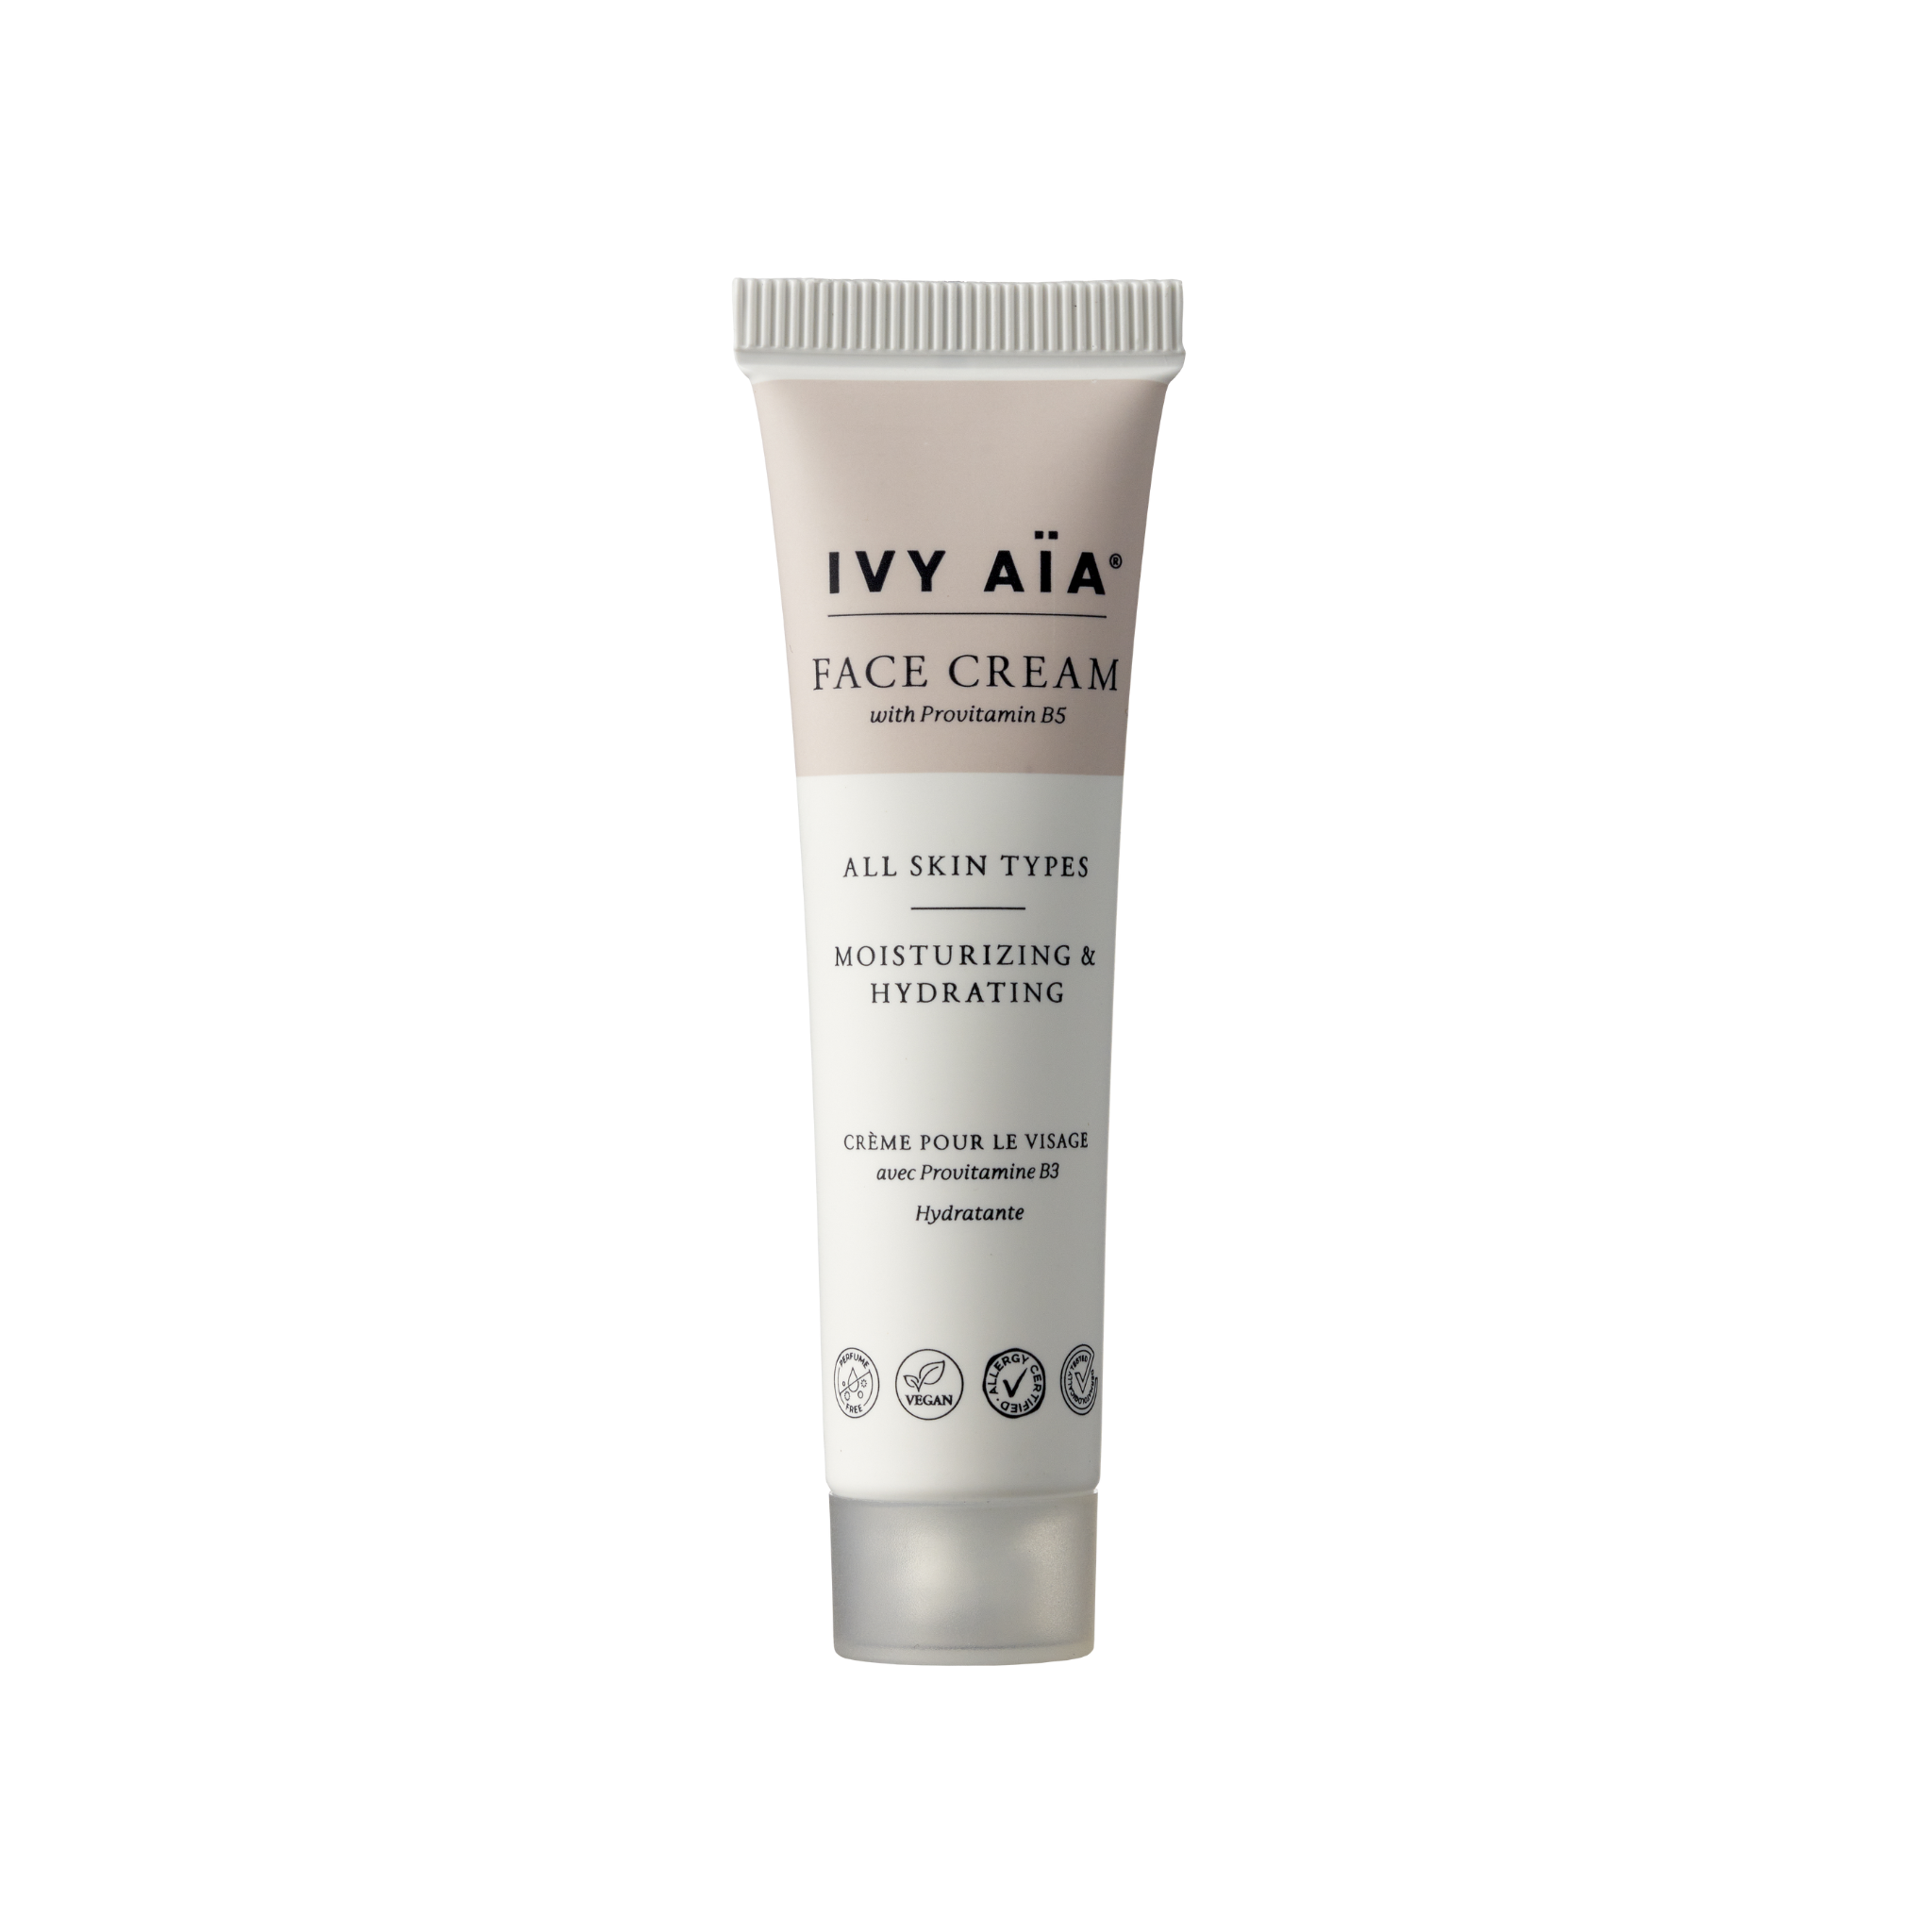 Ivy Aïa Face Cream met Provitamin B5, Reismaat, 15 ml.